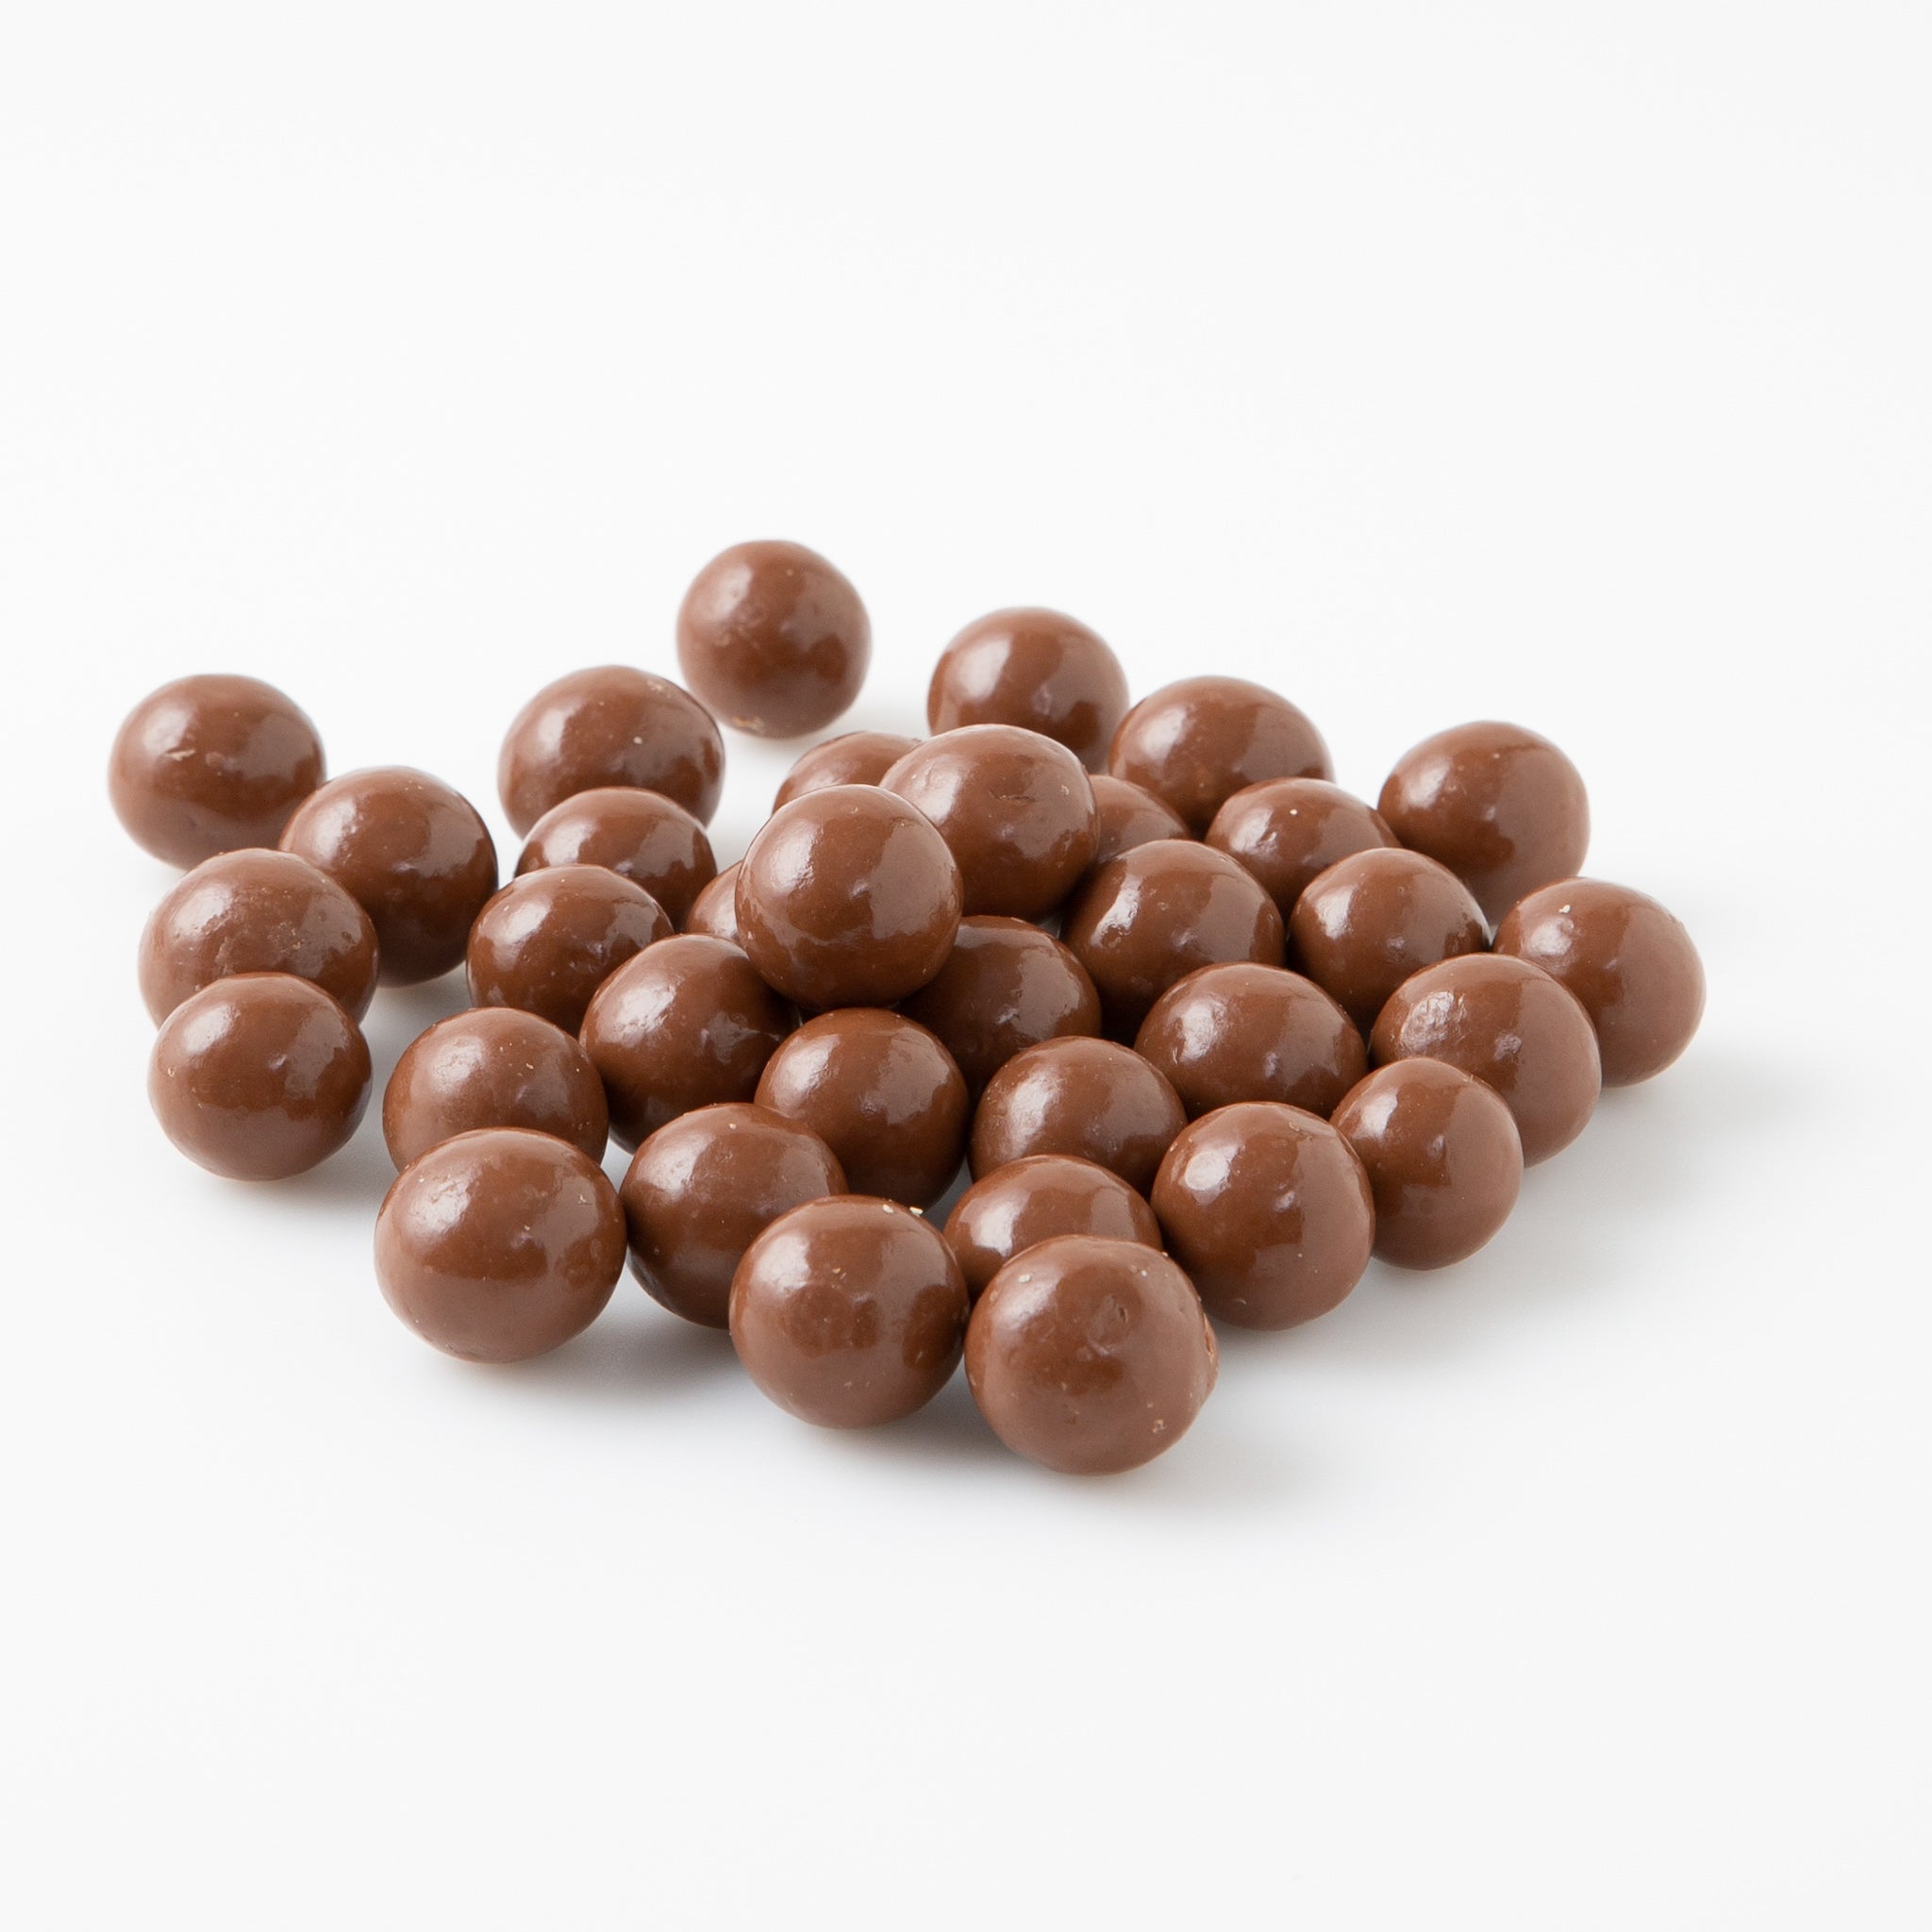 A pile of Milk Chocolate Hazelnuts (Chocolates) - Naked Foods